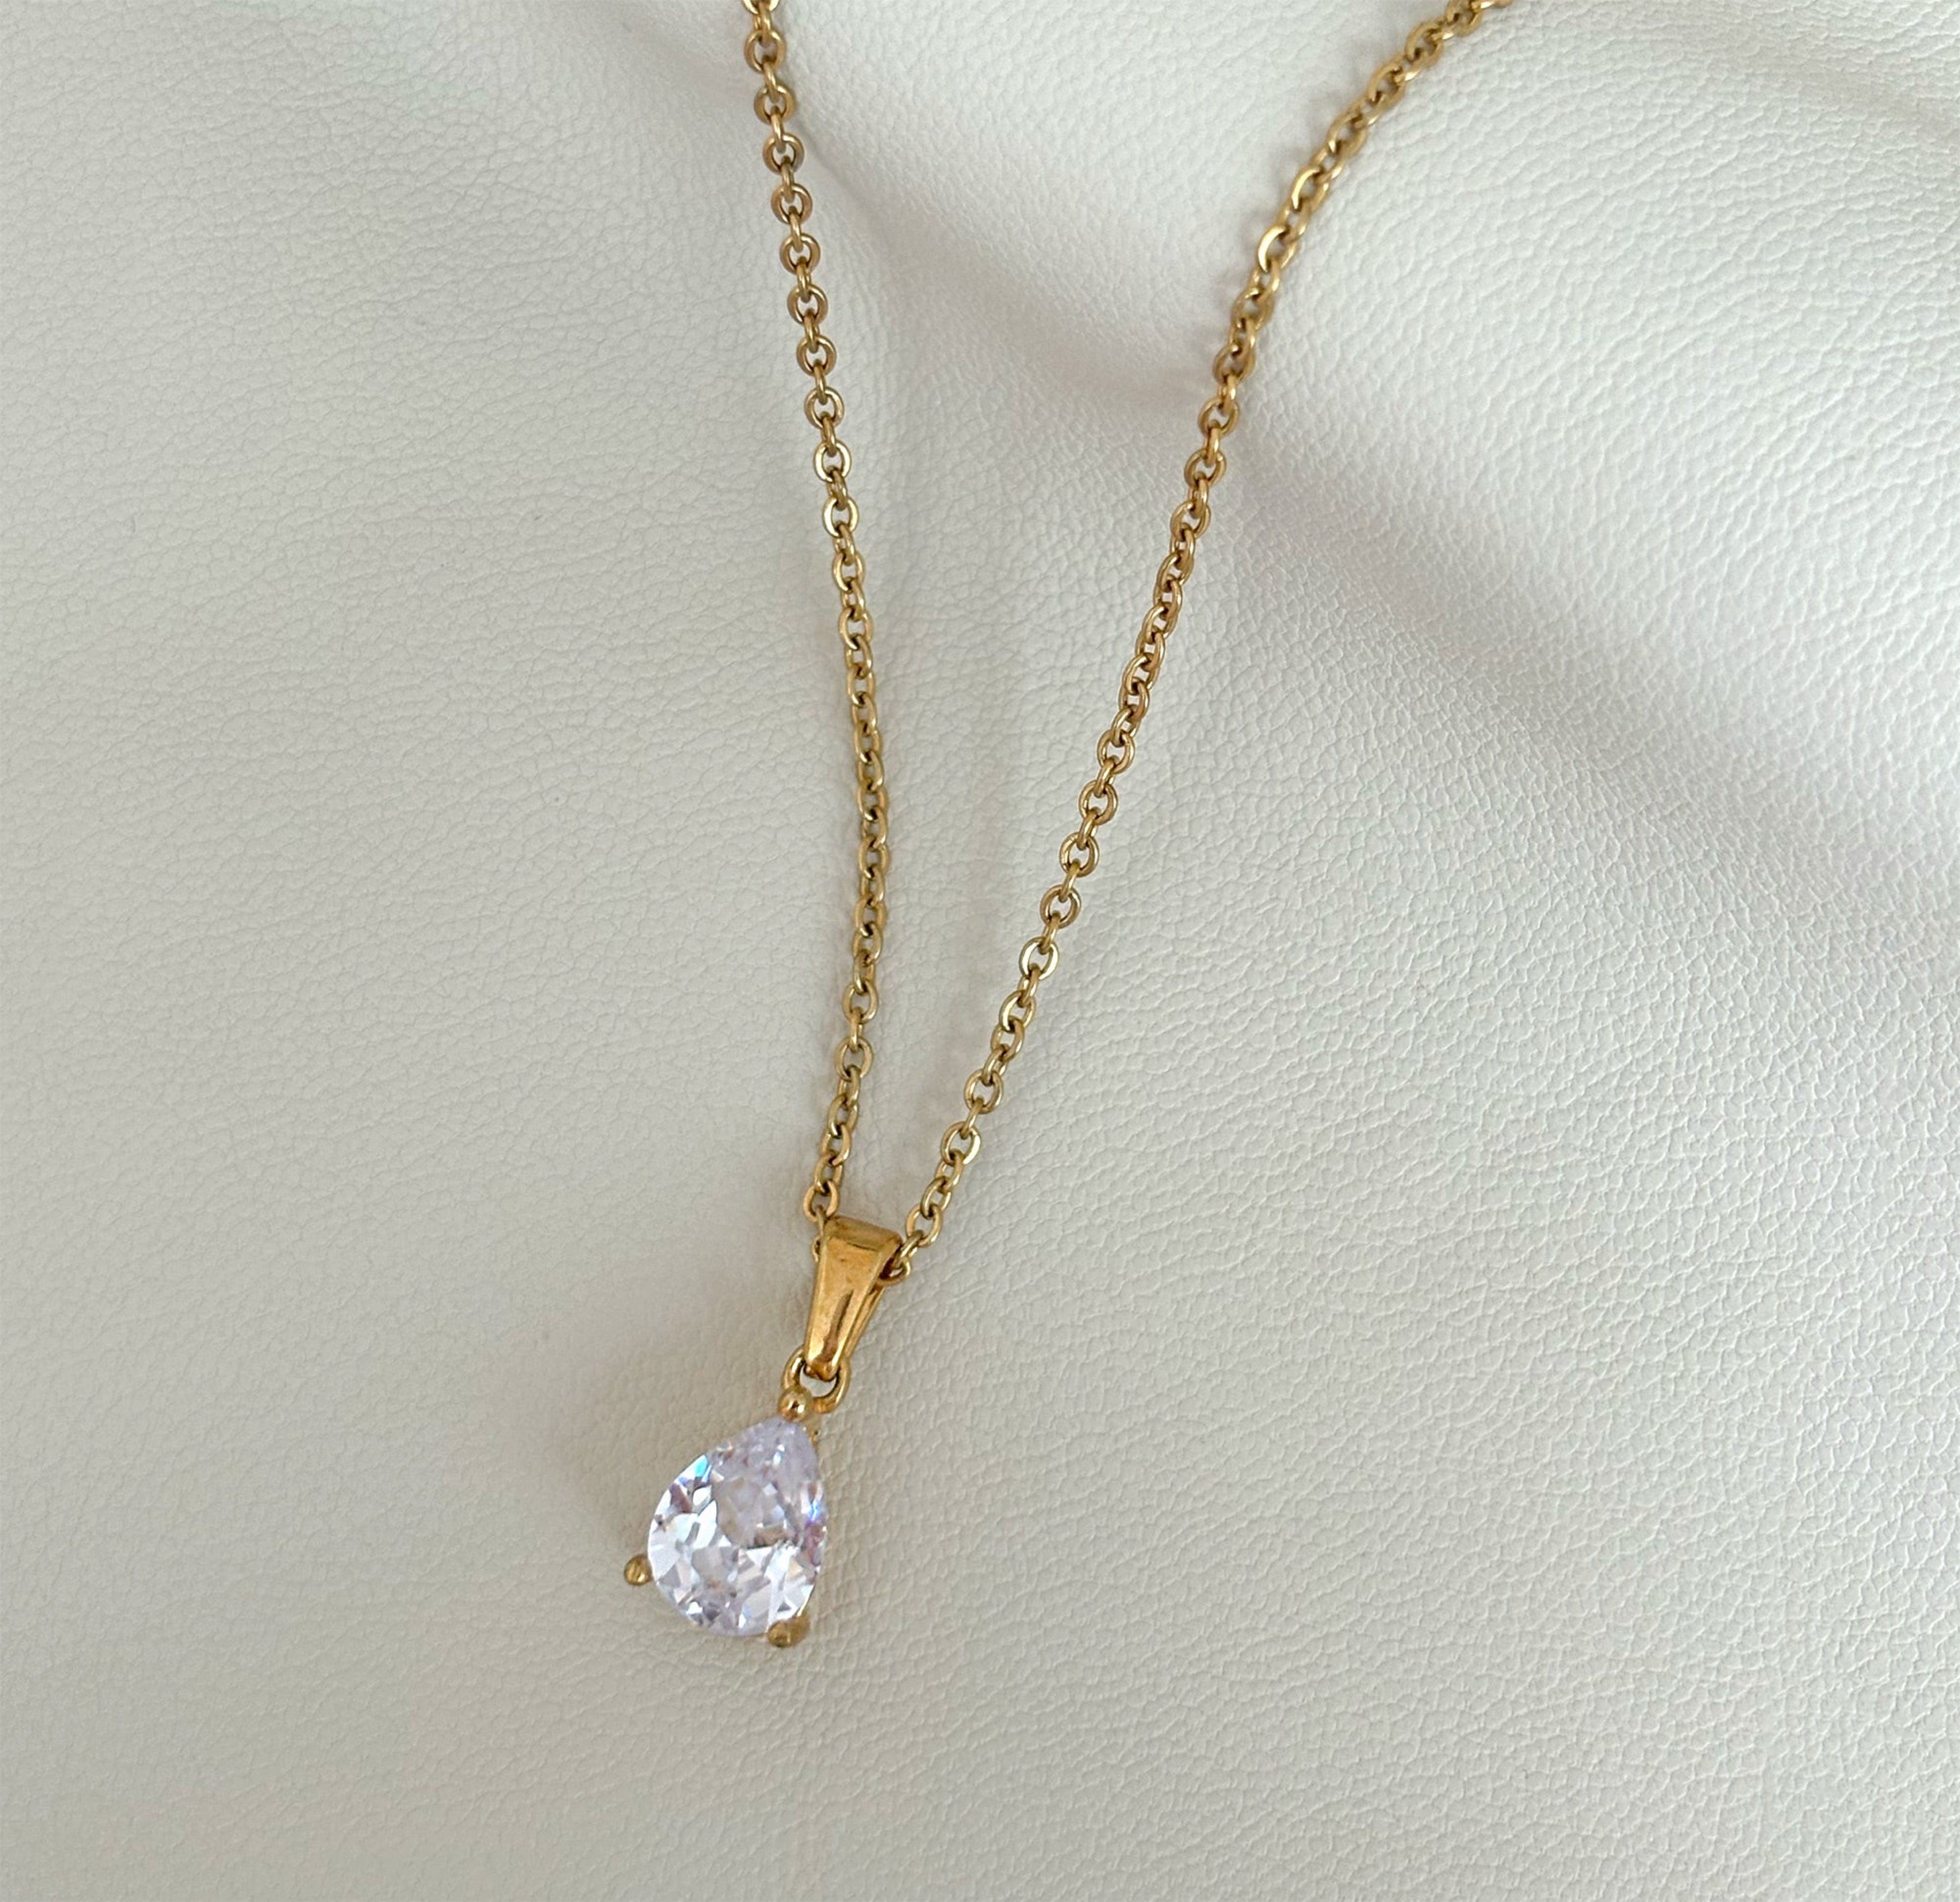 dainty white tear drop stone pendant necklace flat lay